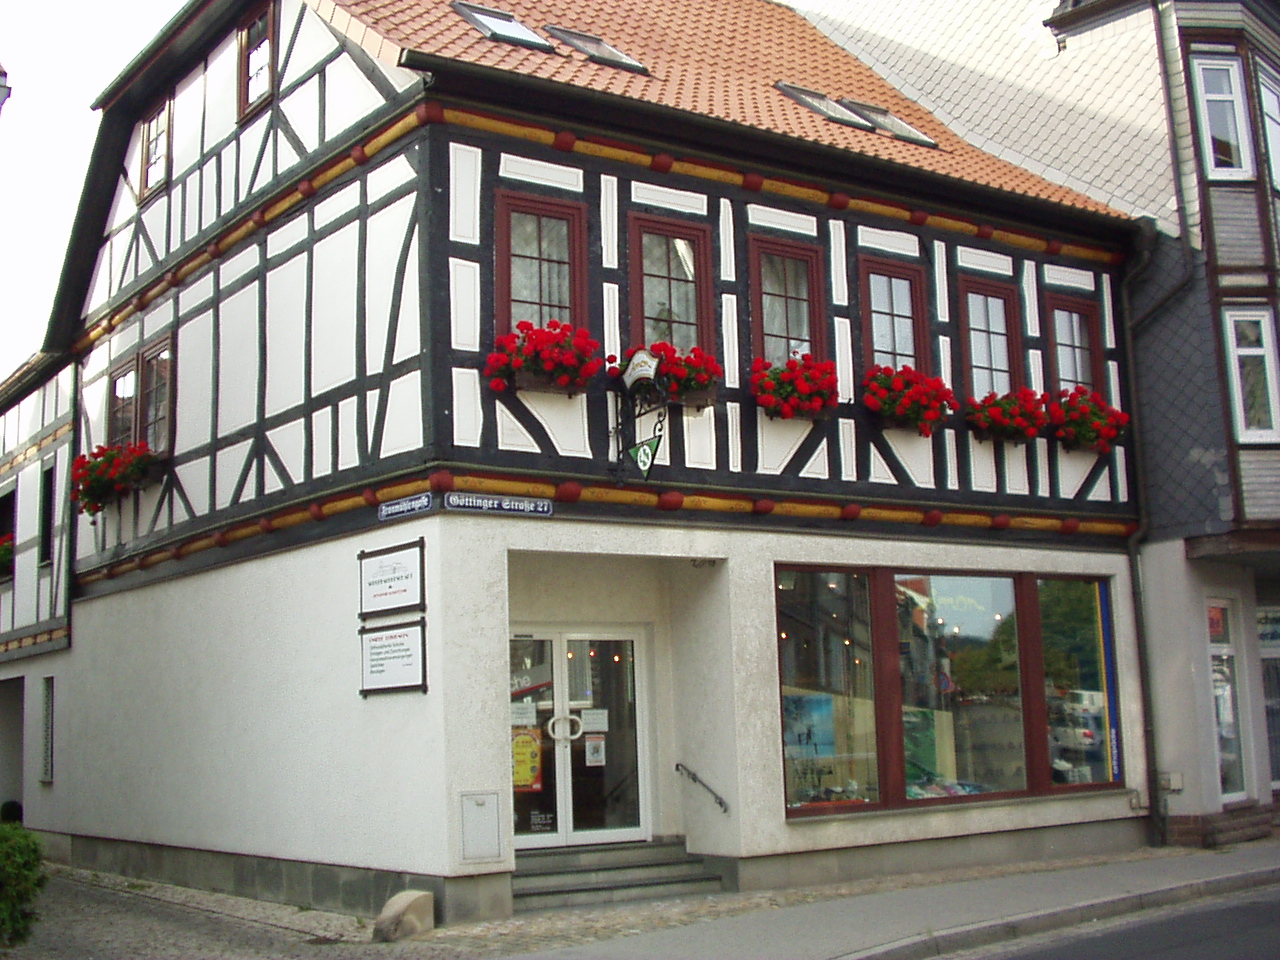 Simon Fuß & Schuhkomfort, Göttinger Str. 27 in Heilbad Heiligenstadt